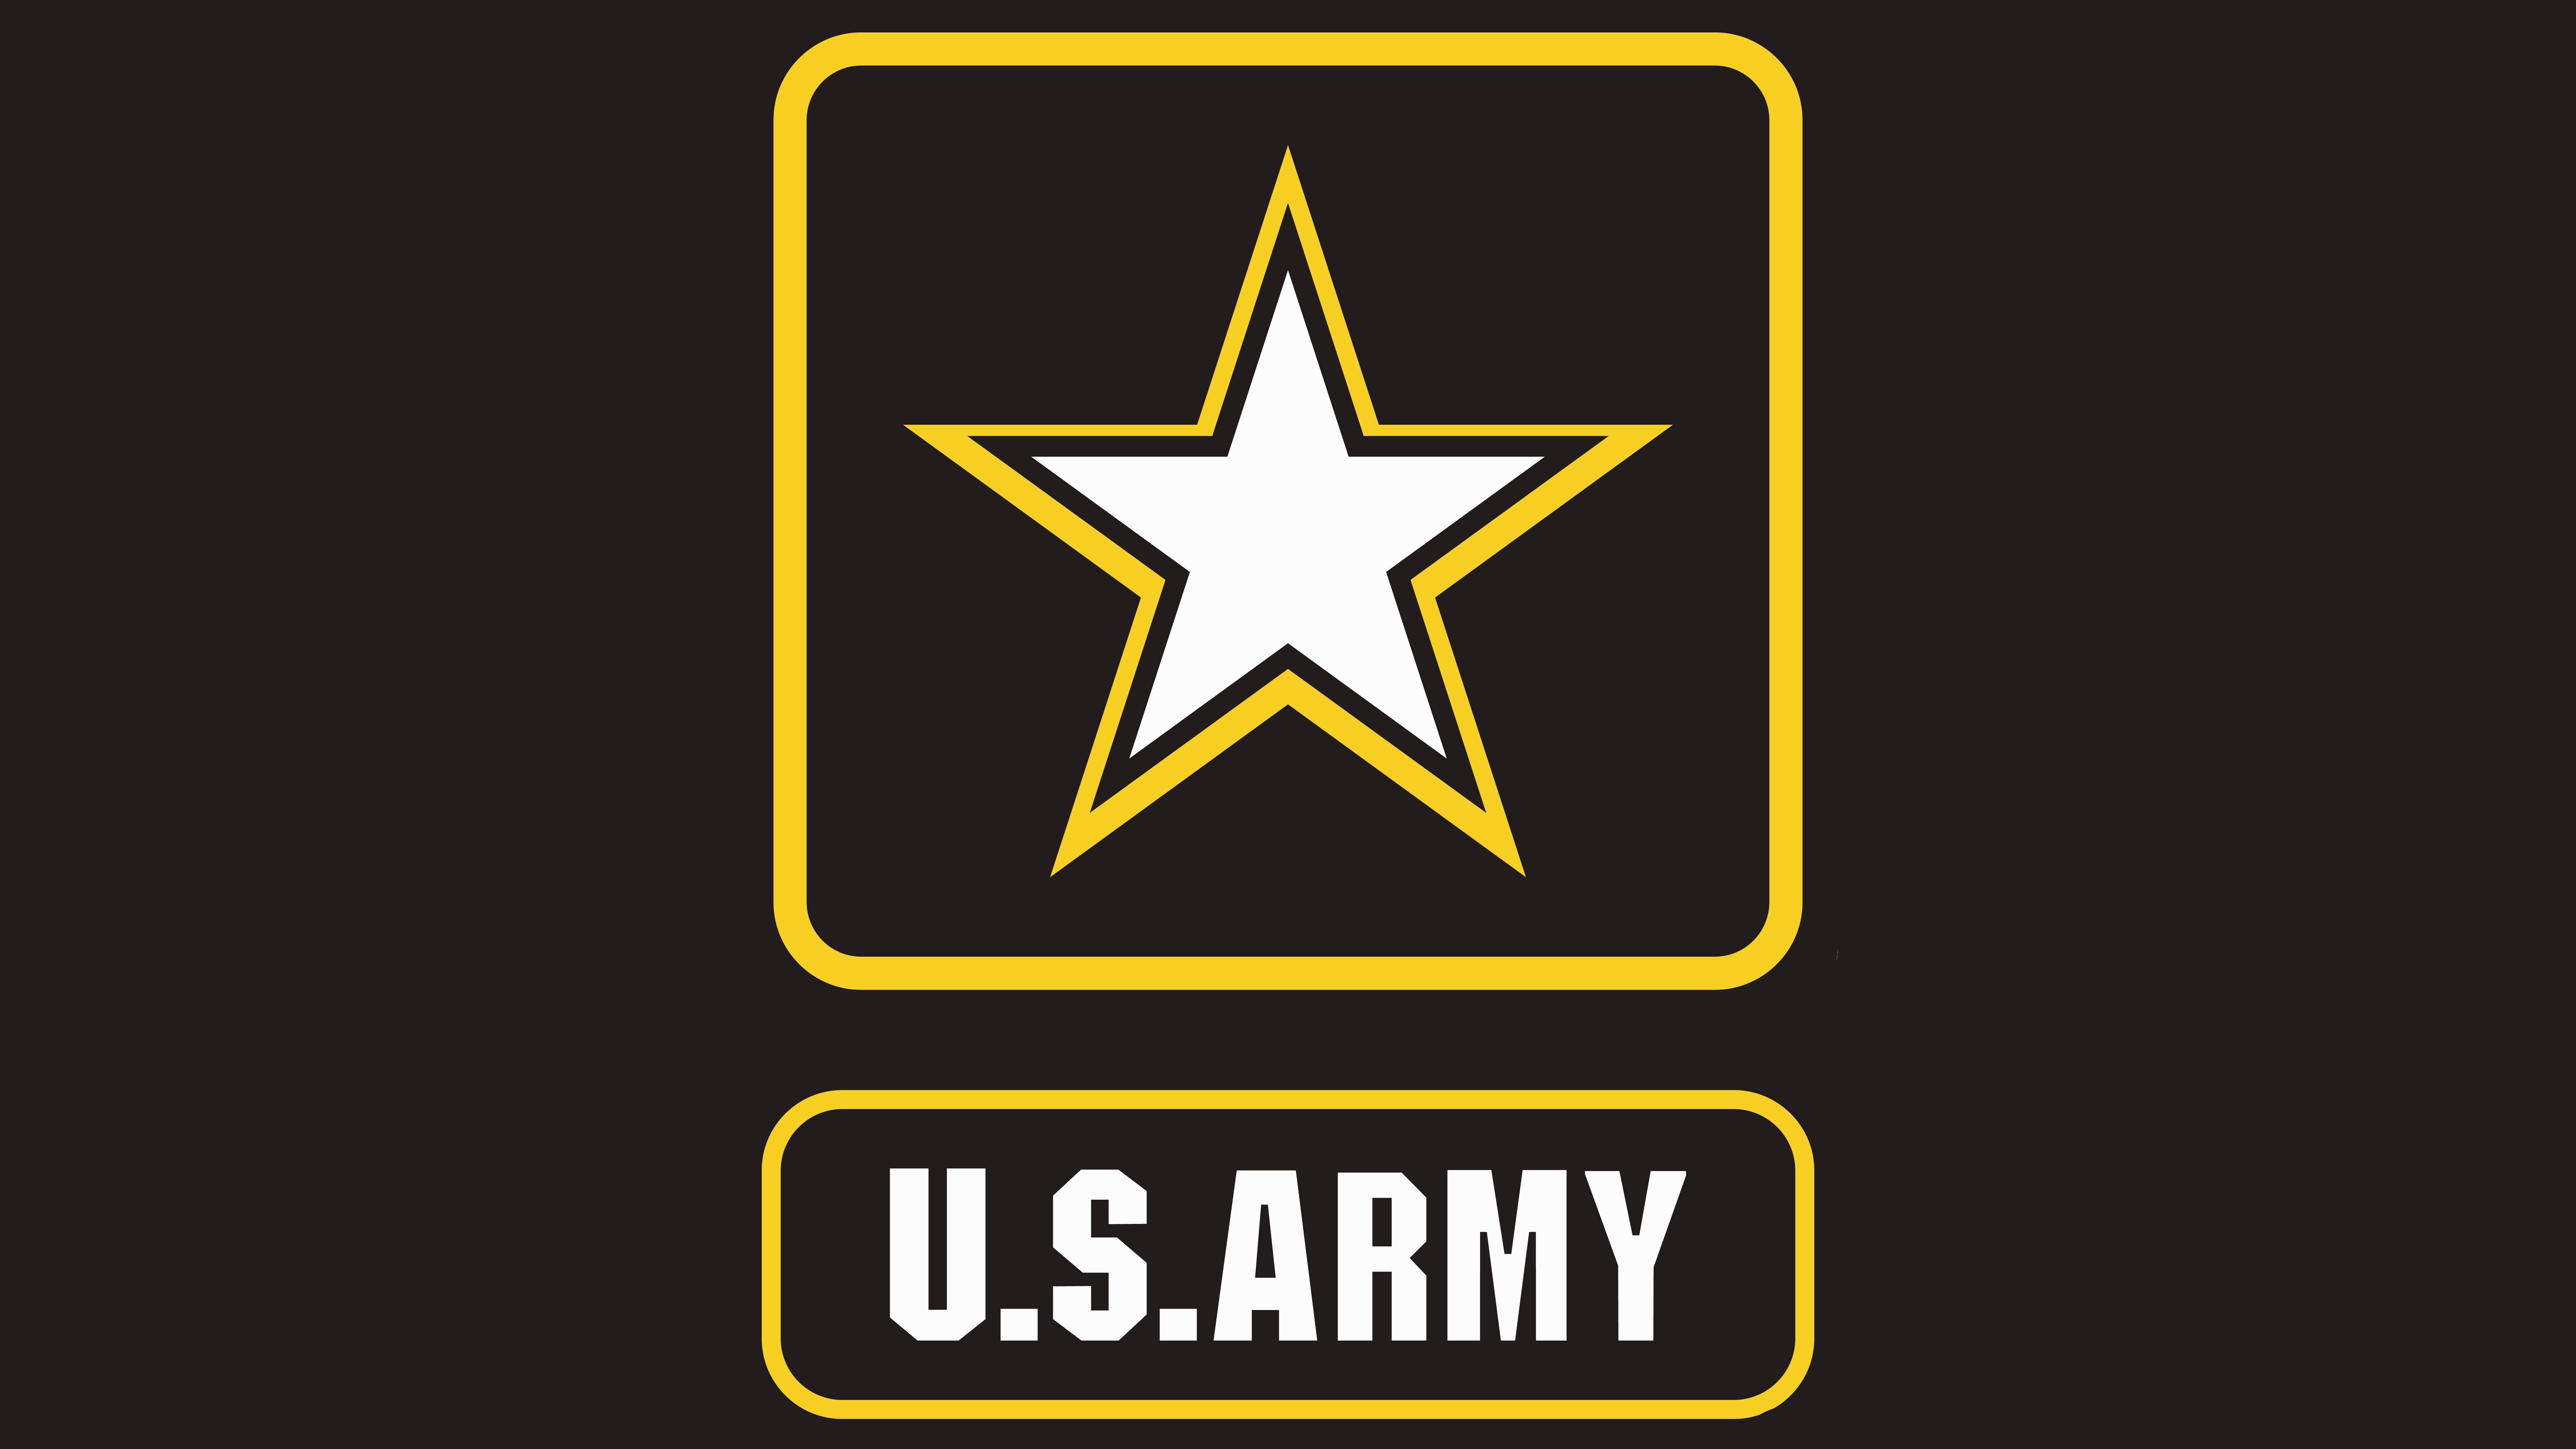 Army Logo Wallpaper - Army Military